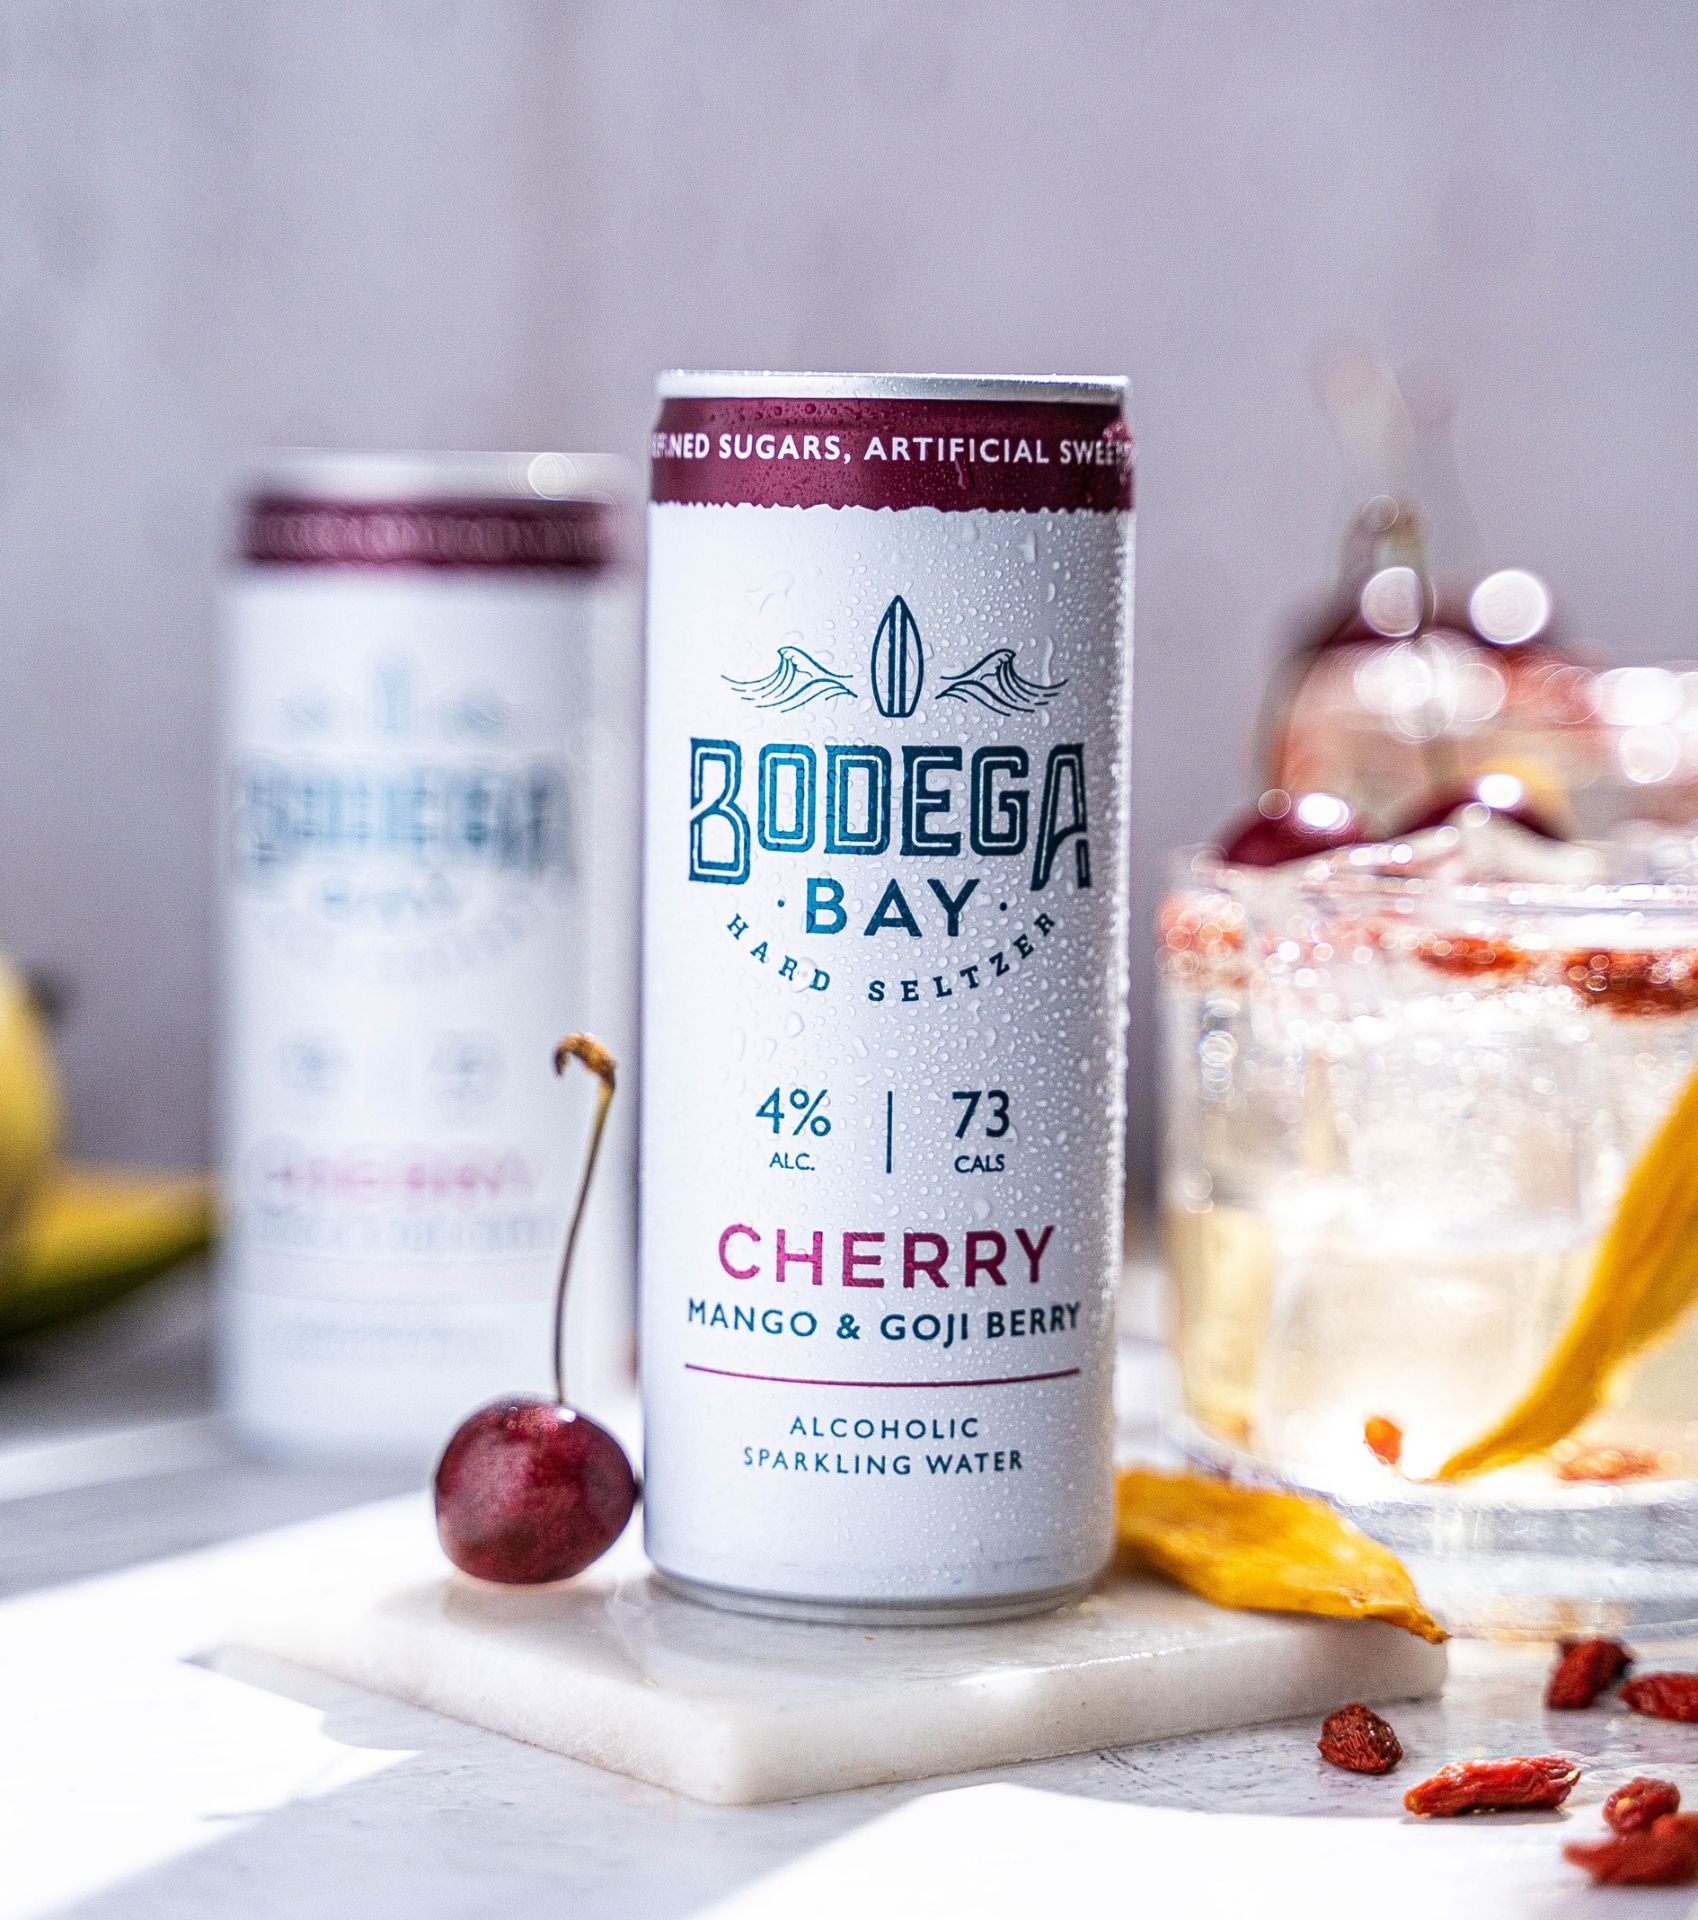 24 x Bodega Bay Hard Seltzer 250ml Alcoholic Sparkling Water Drinks - Cherry Mango & Goji Berry - 4% - Image 5 of 8